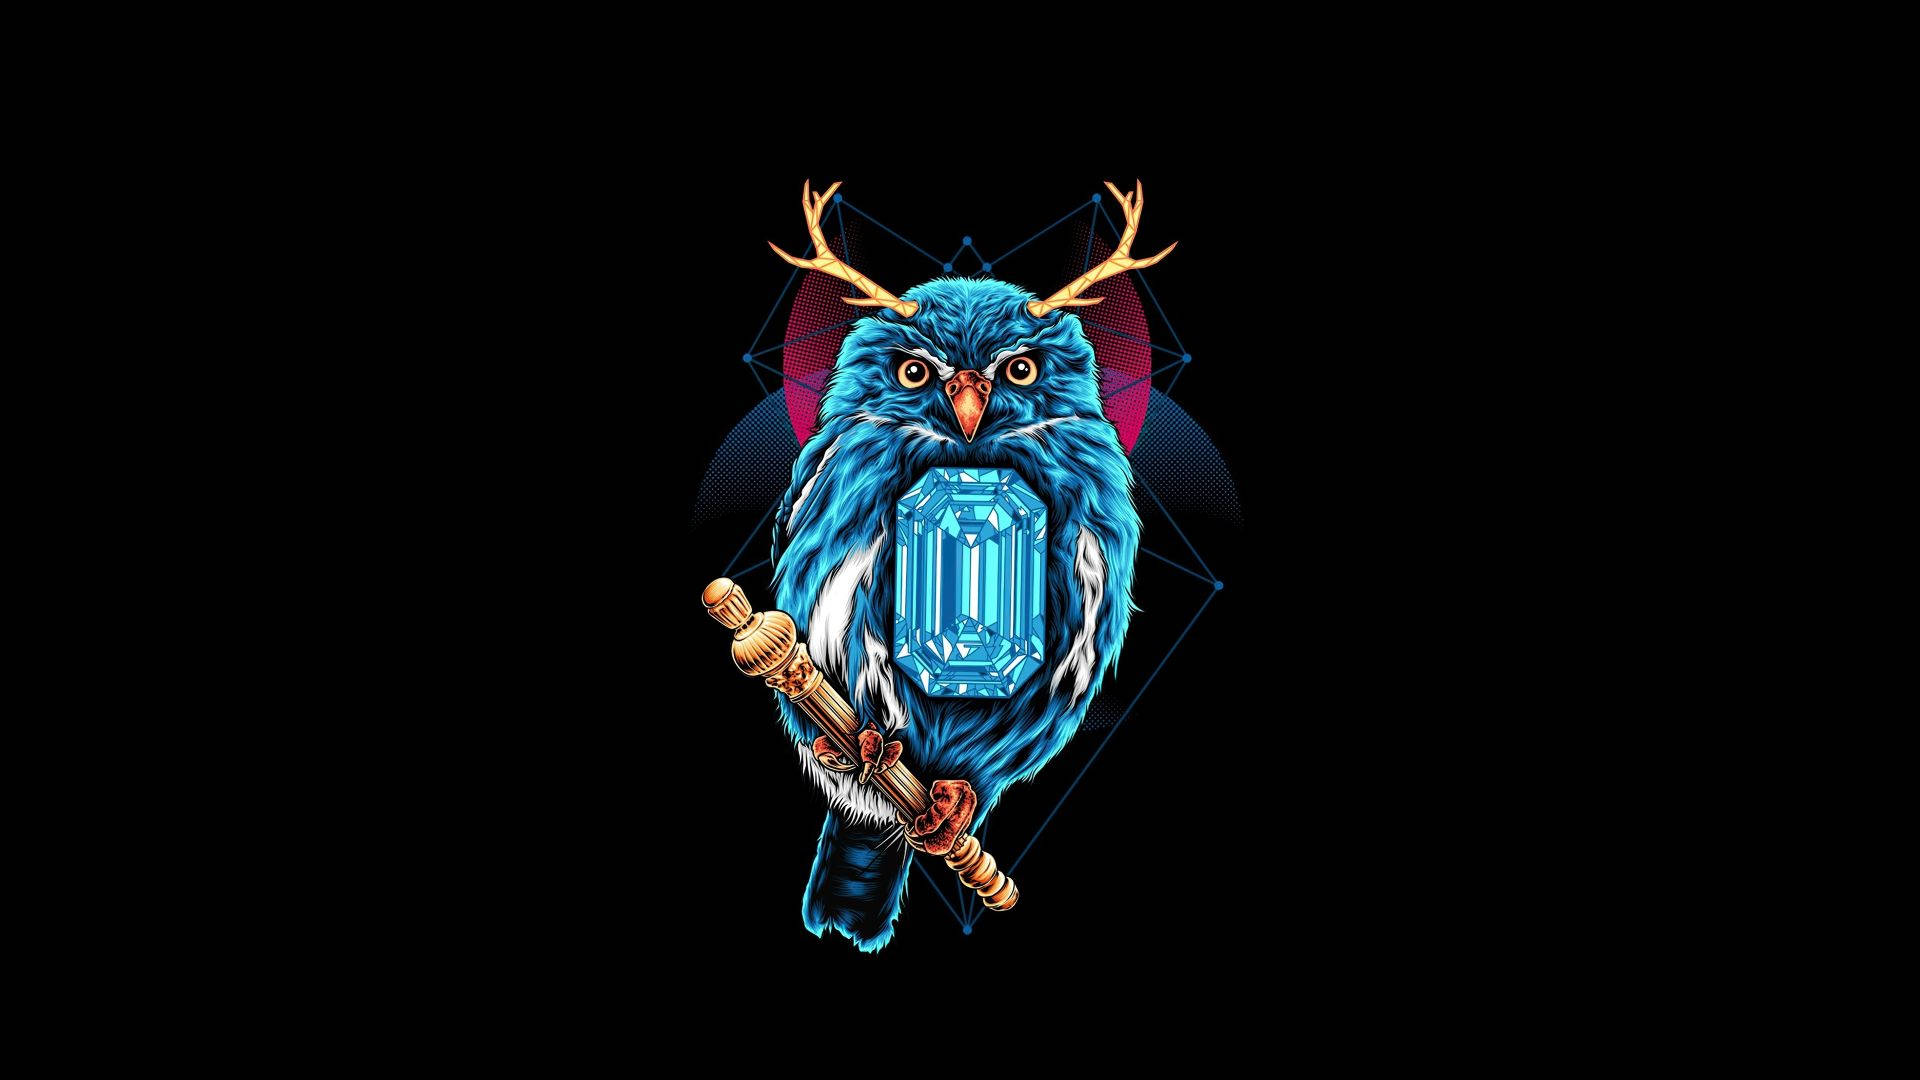 Blue Hair Owl Digital Art - wide 3